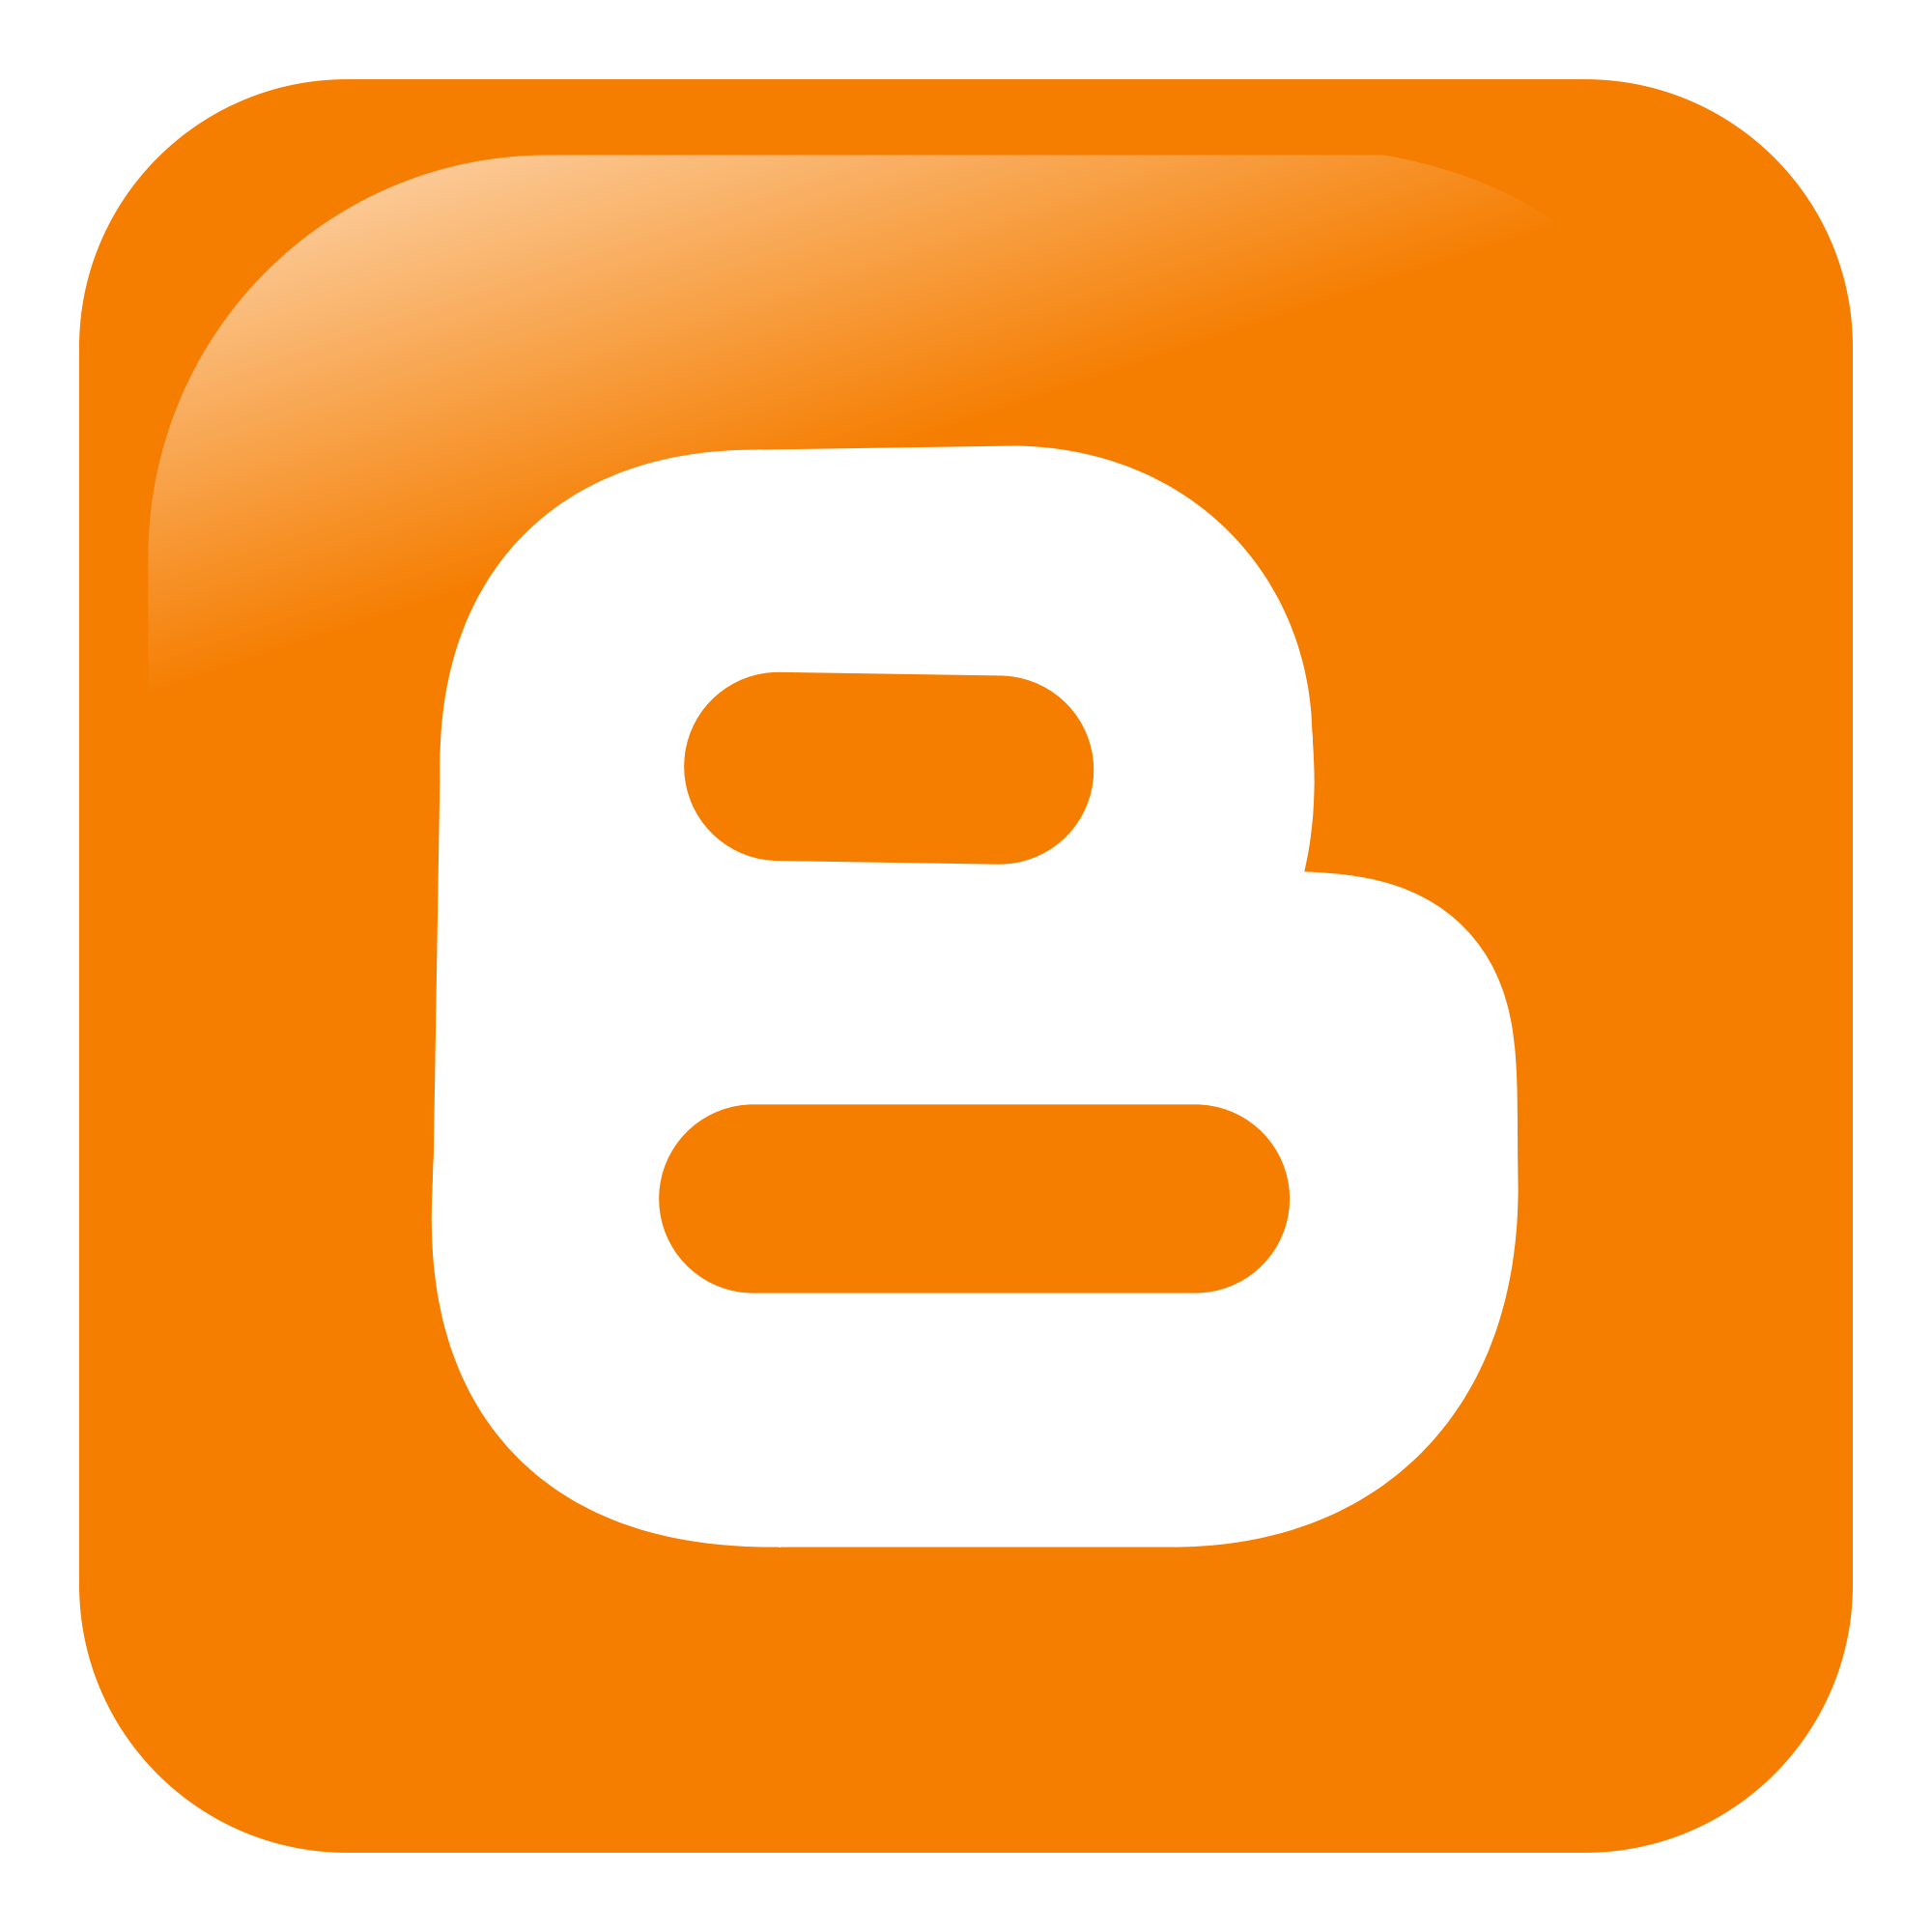 Internet Service Company Orange B Logo - File sharing internet service Logos